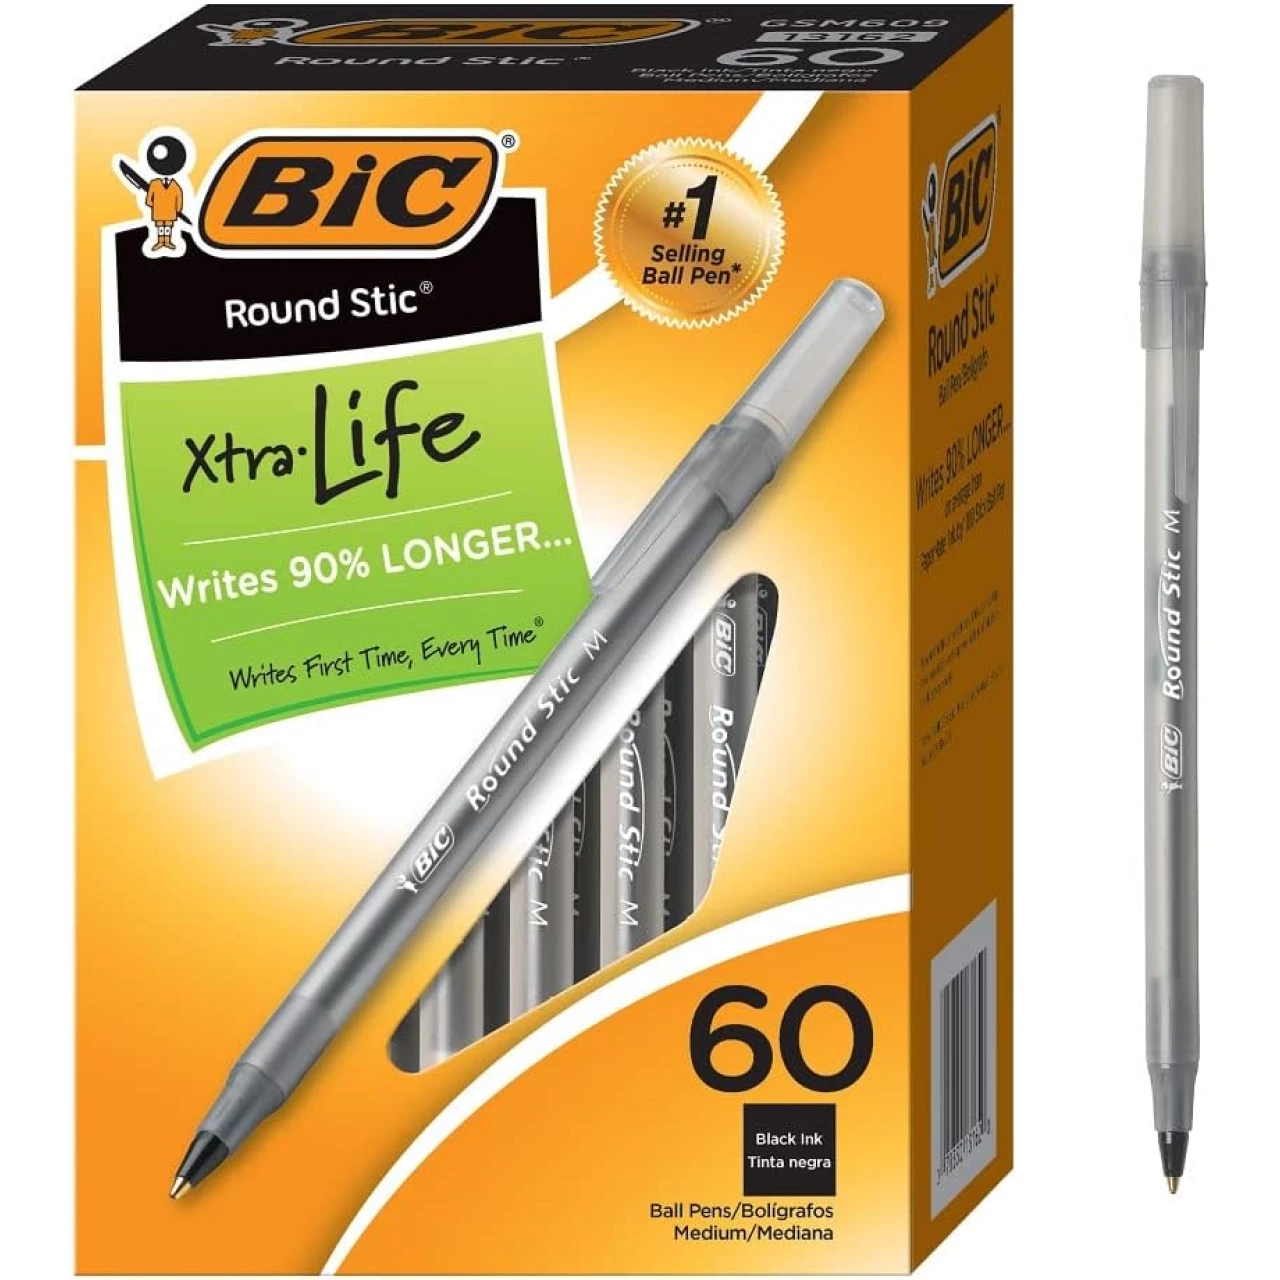 BIC Round Stic Xtra Life Ballpoint Pens